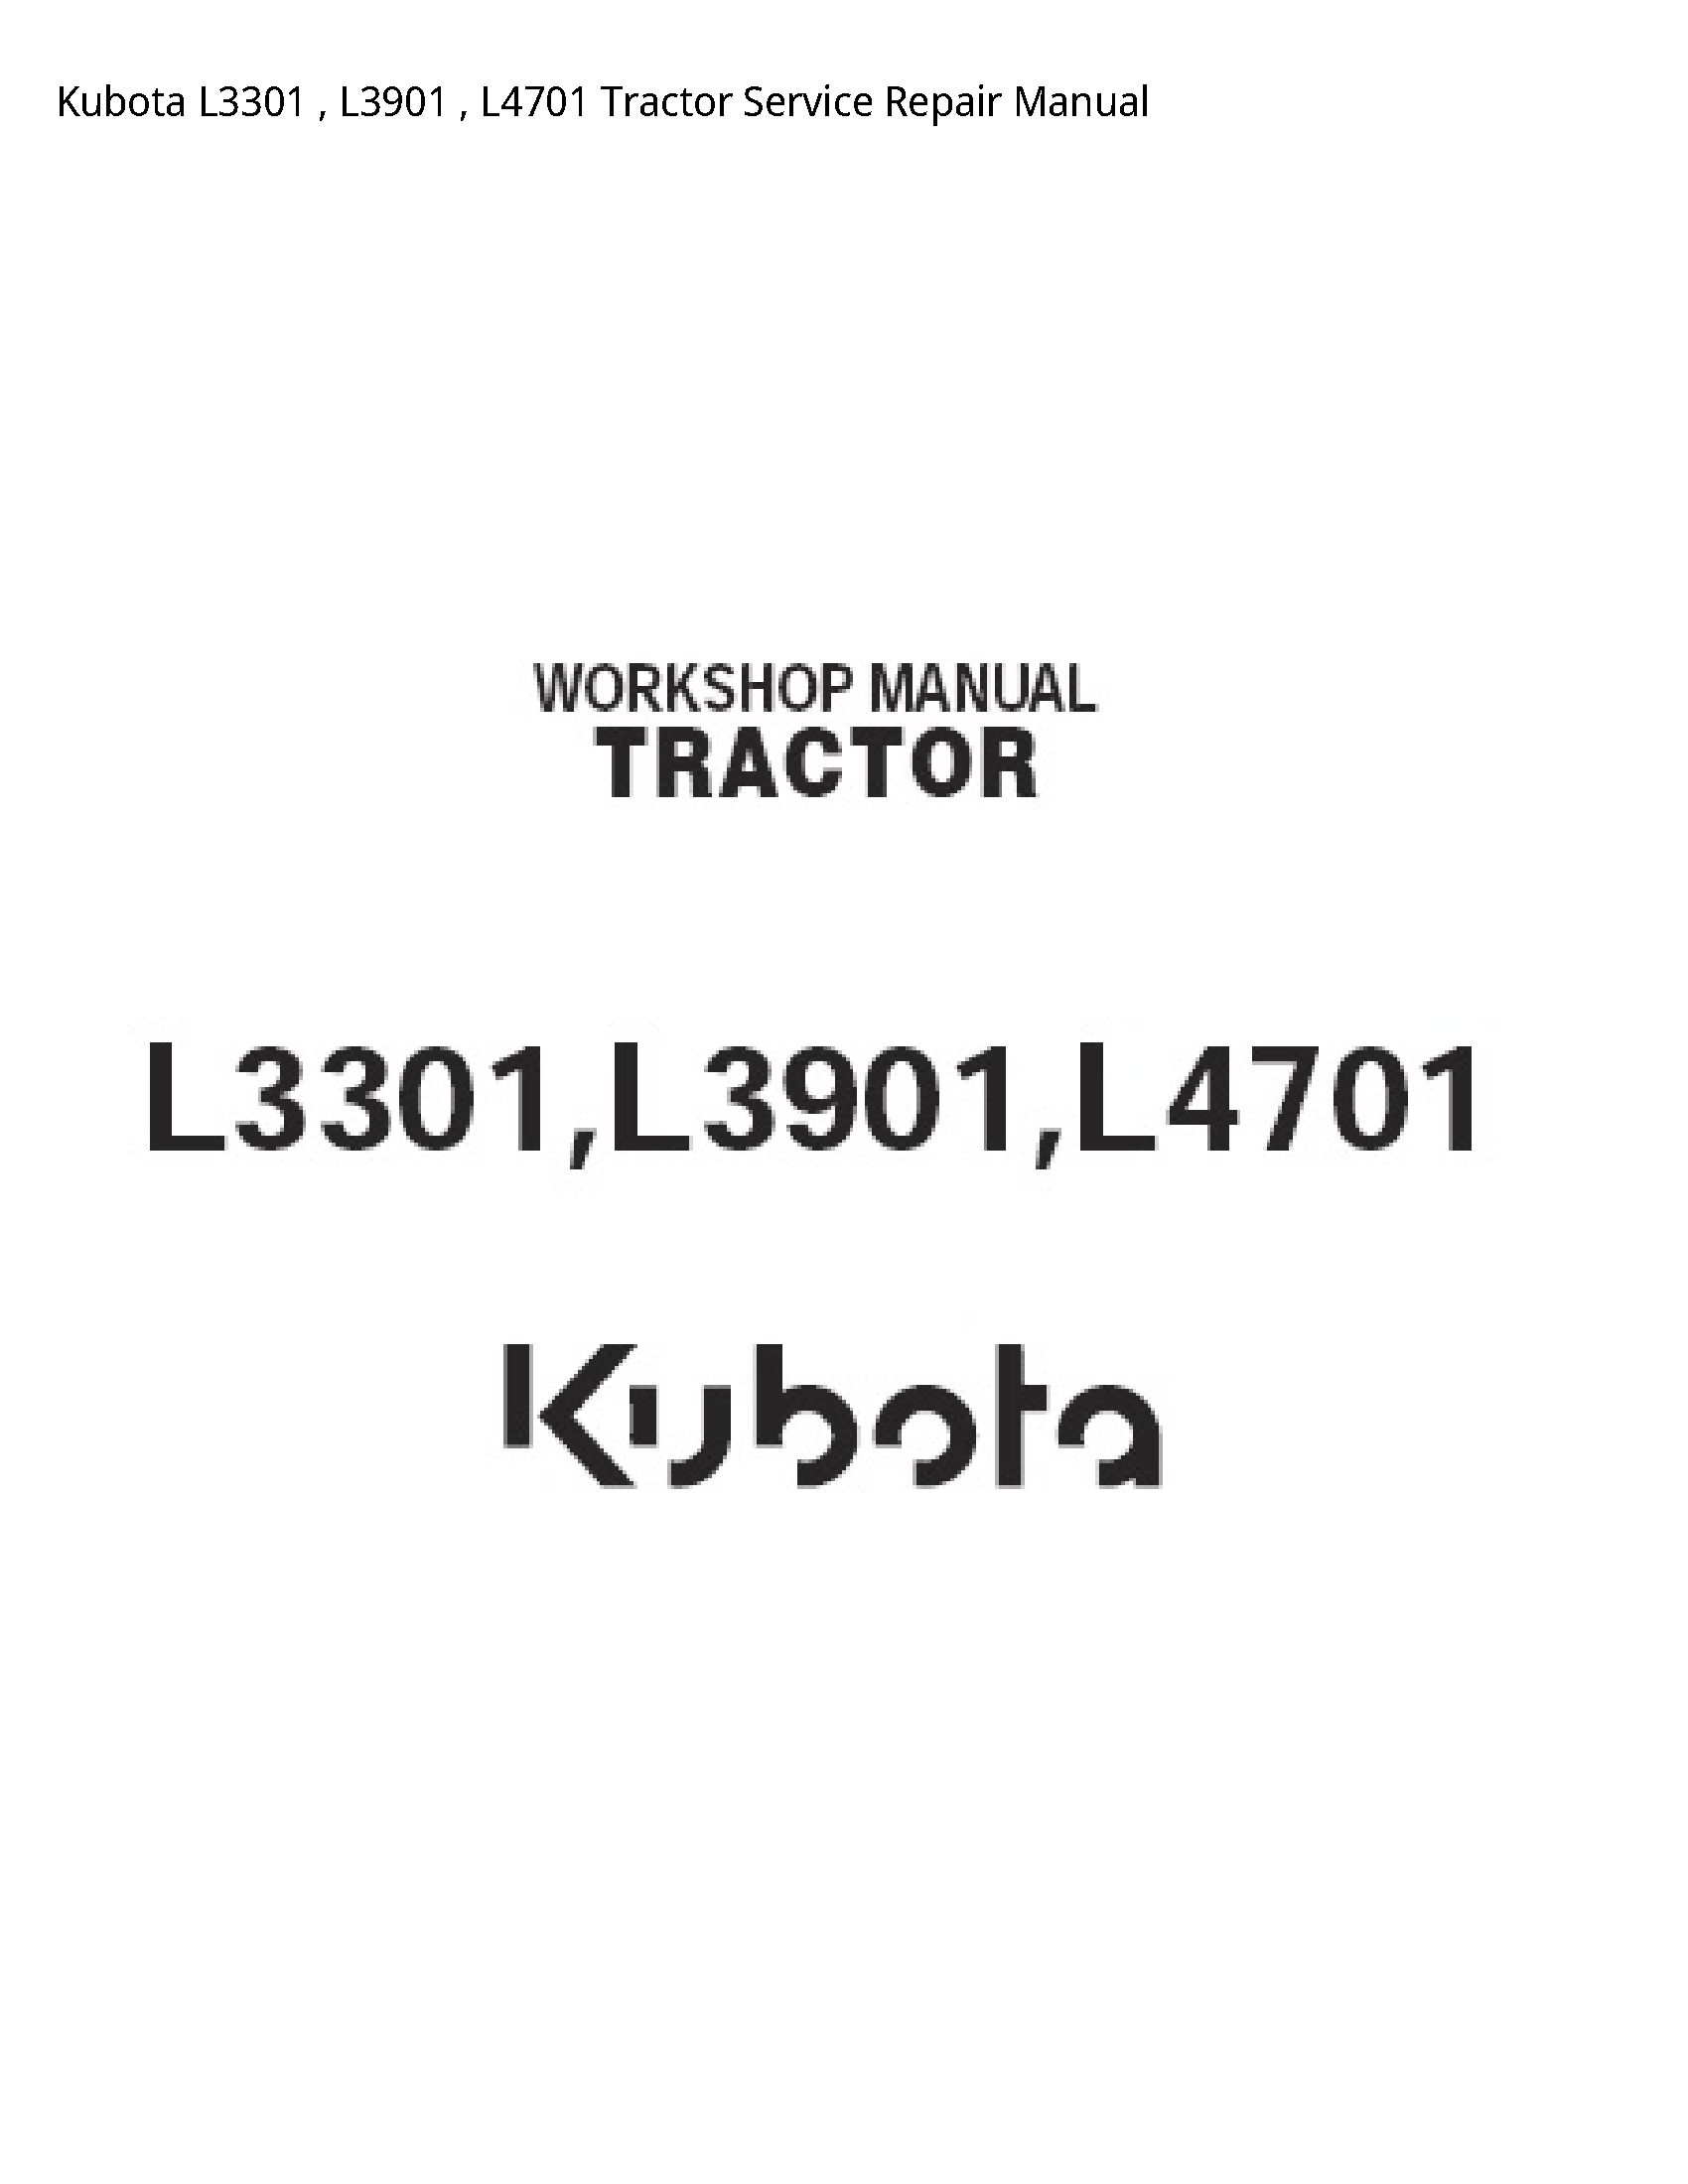 Kubota L3301 Tractor manual